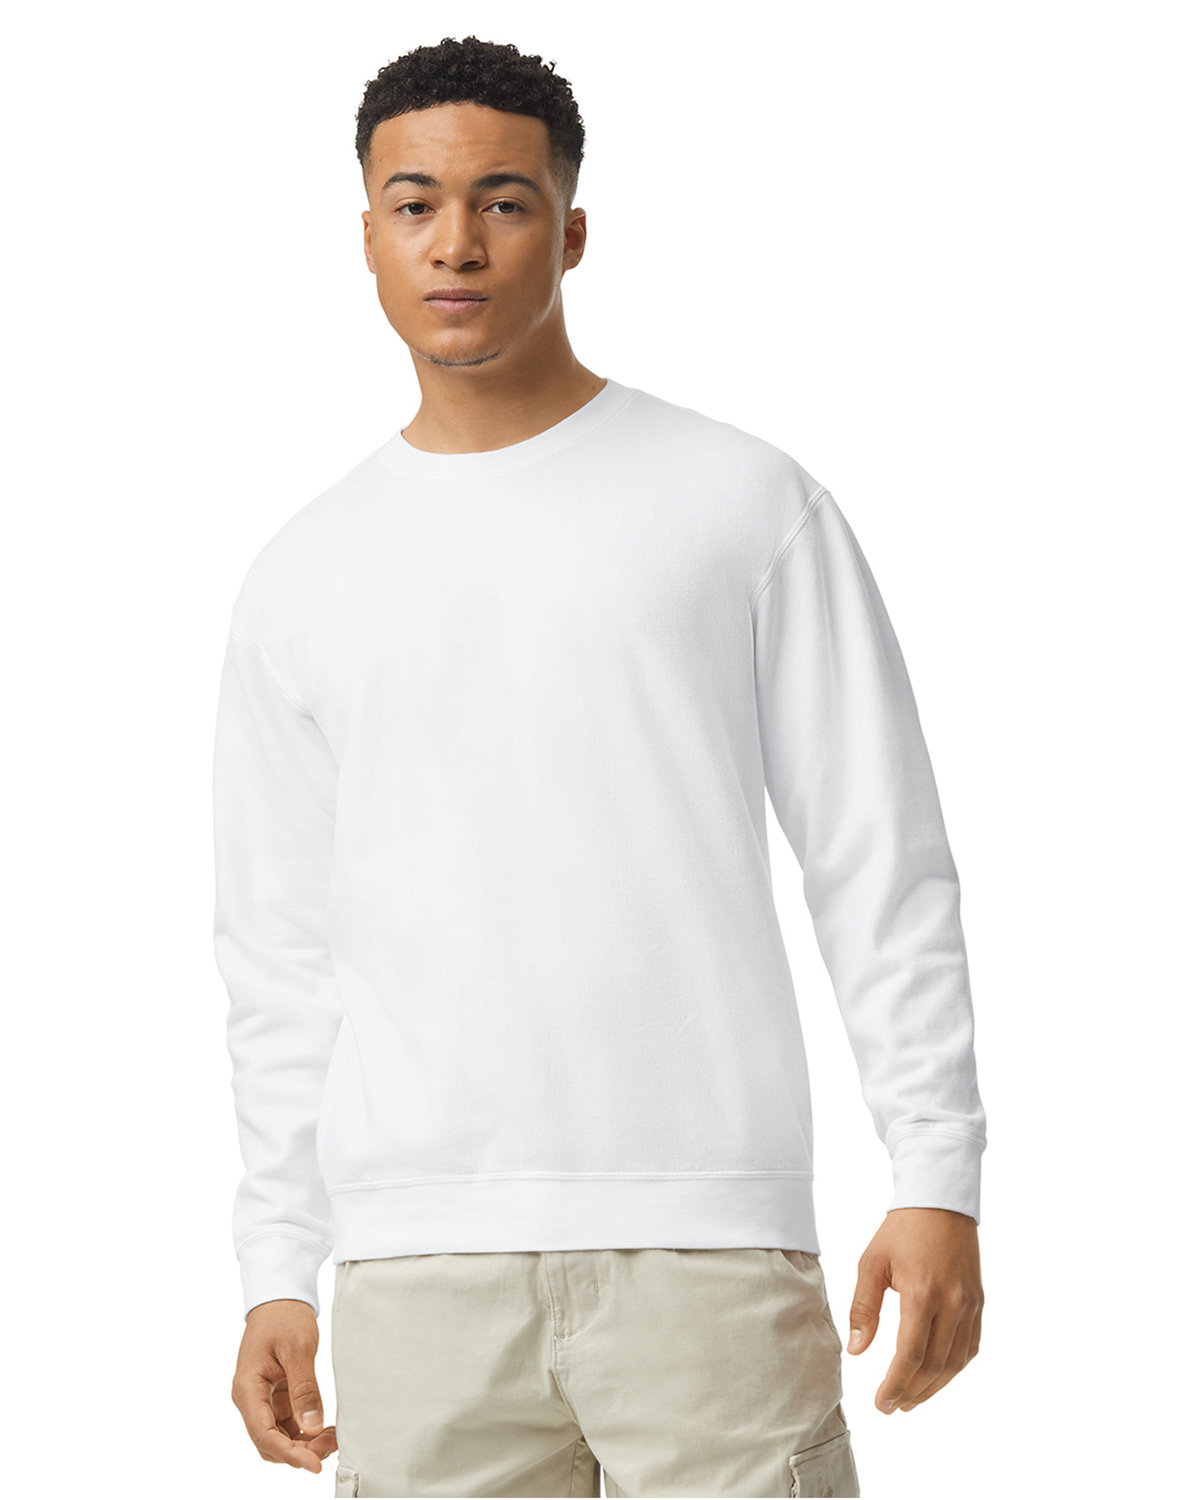 Unisex Lighweight Cotton Crewneck Sweatshirt-Comfort Colors